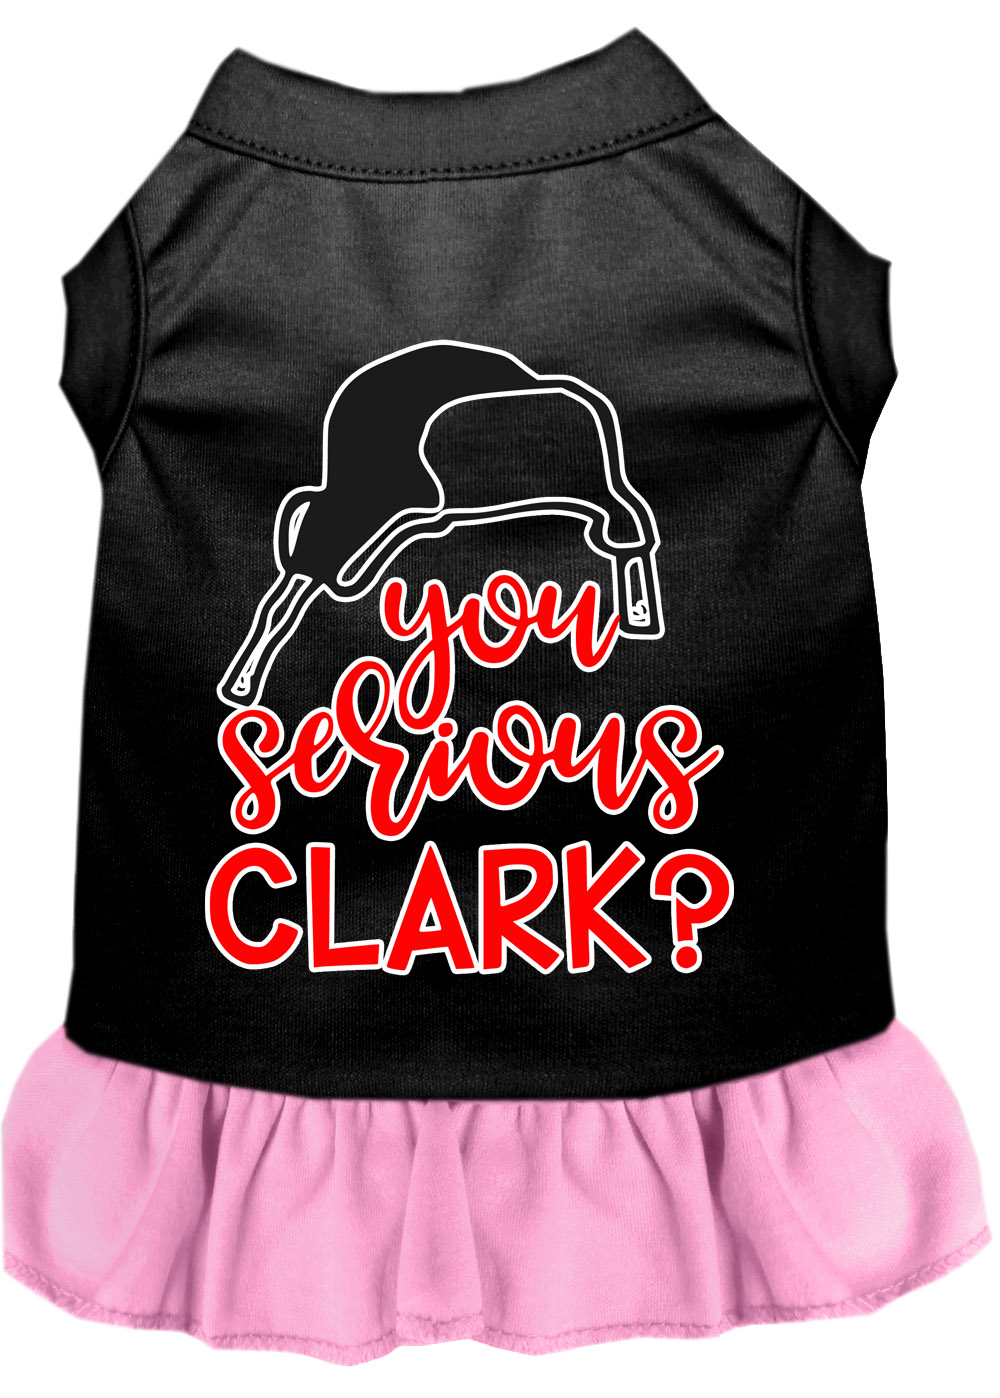 You Serious Clark? Screen Print Dog Dress Black with Light Pink Sm